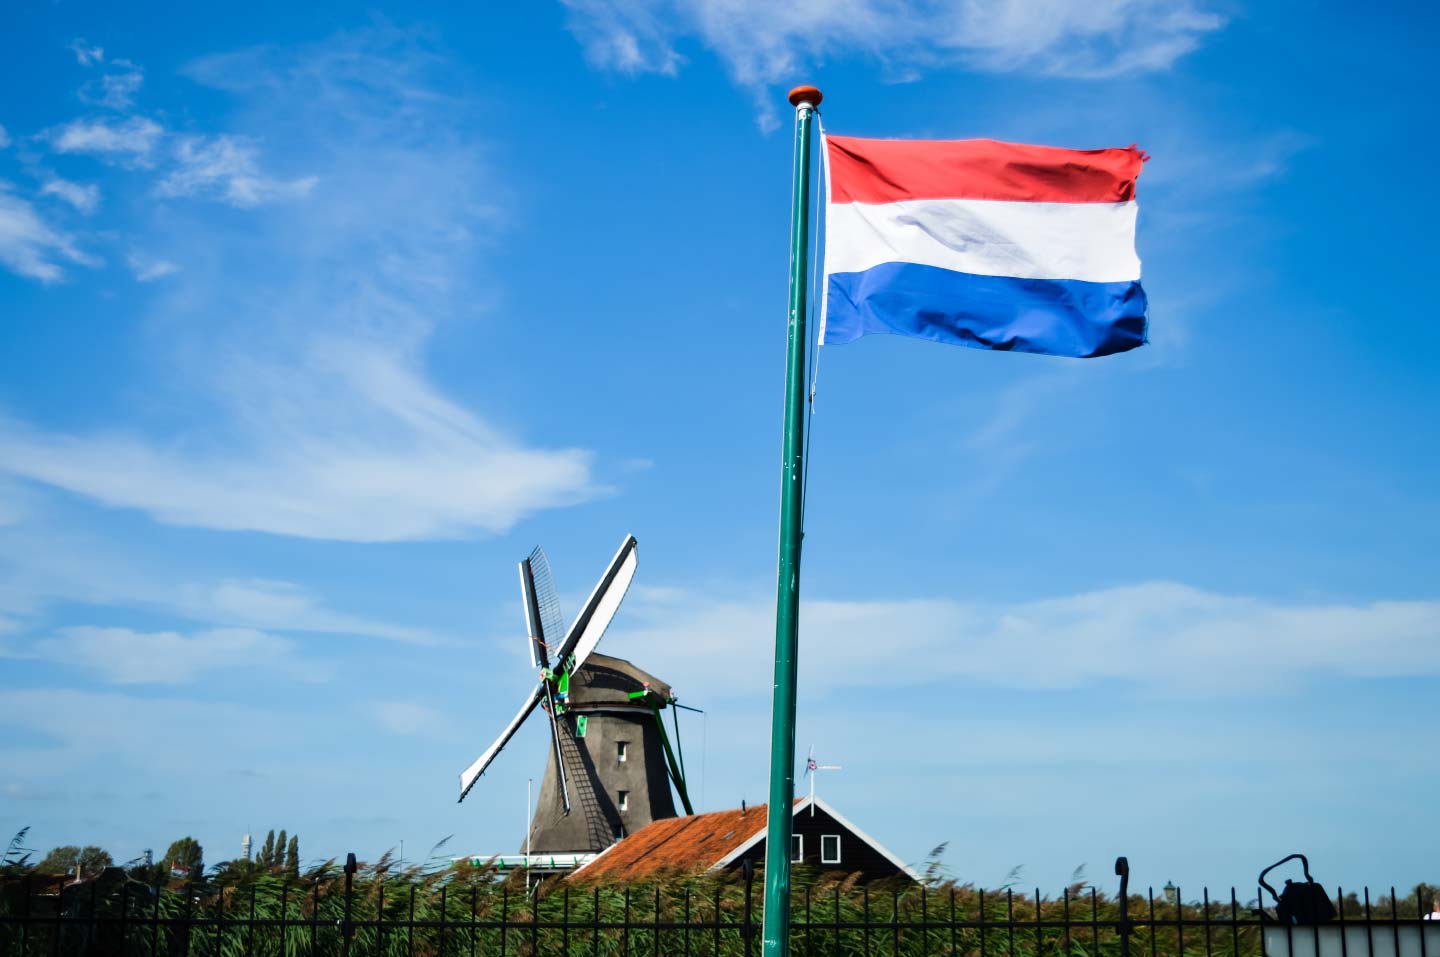 Netherlands - Covid-19: border restrictions